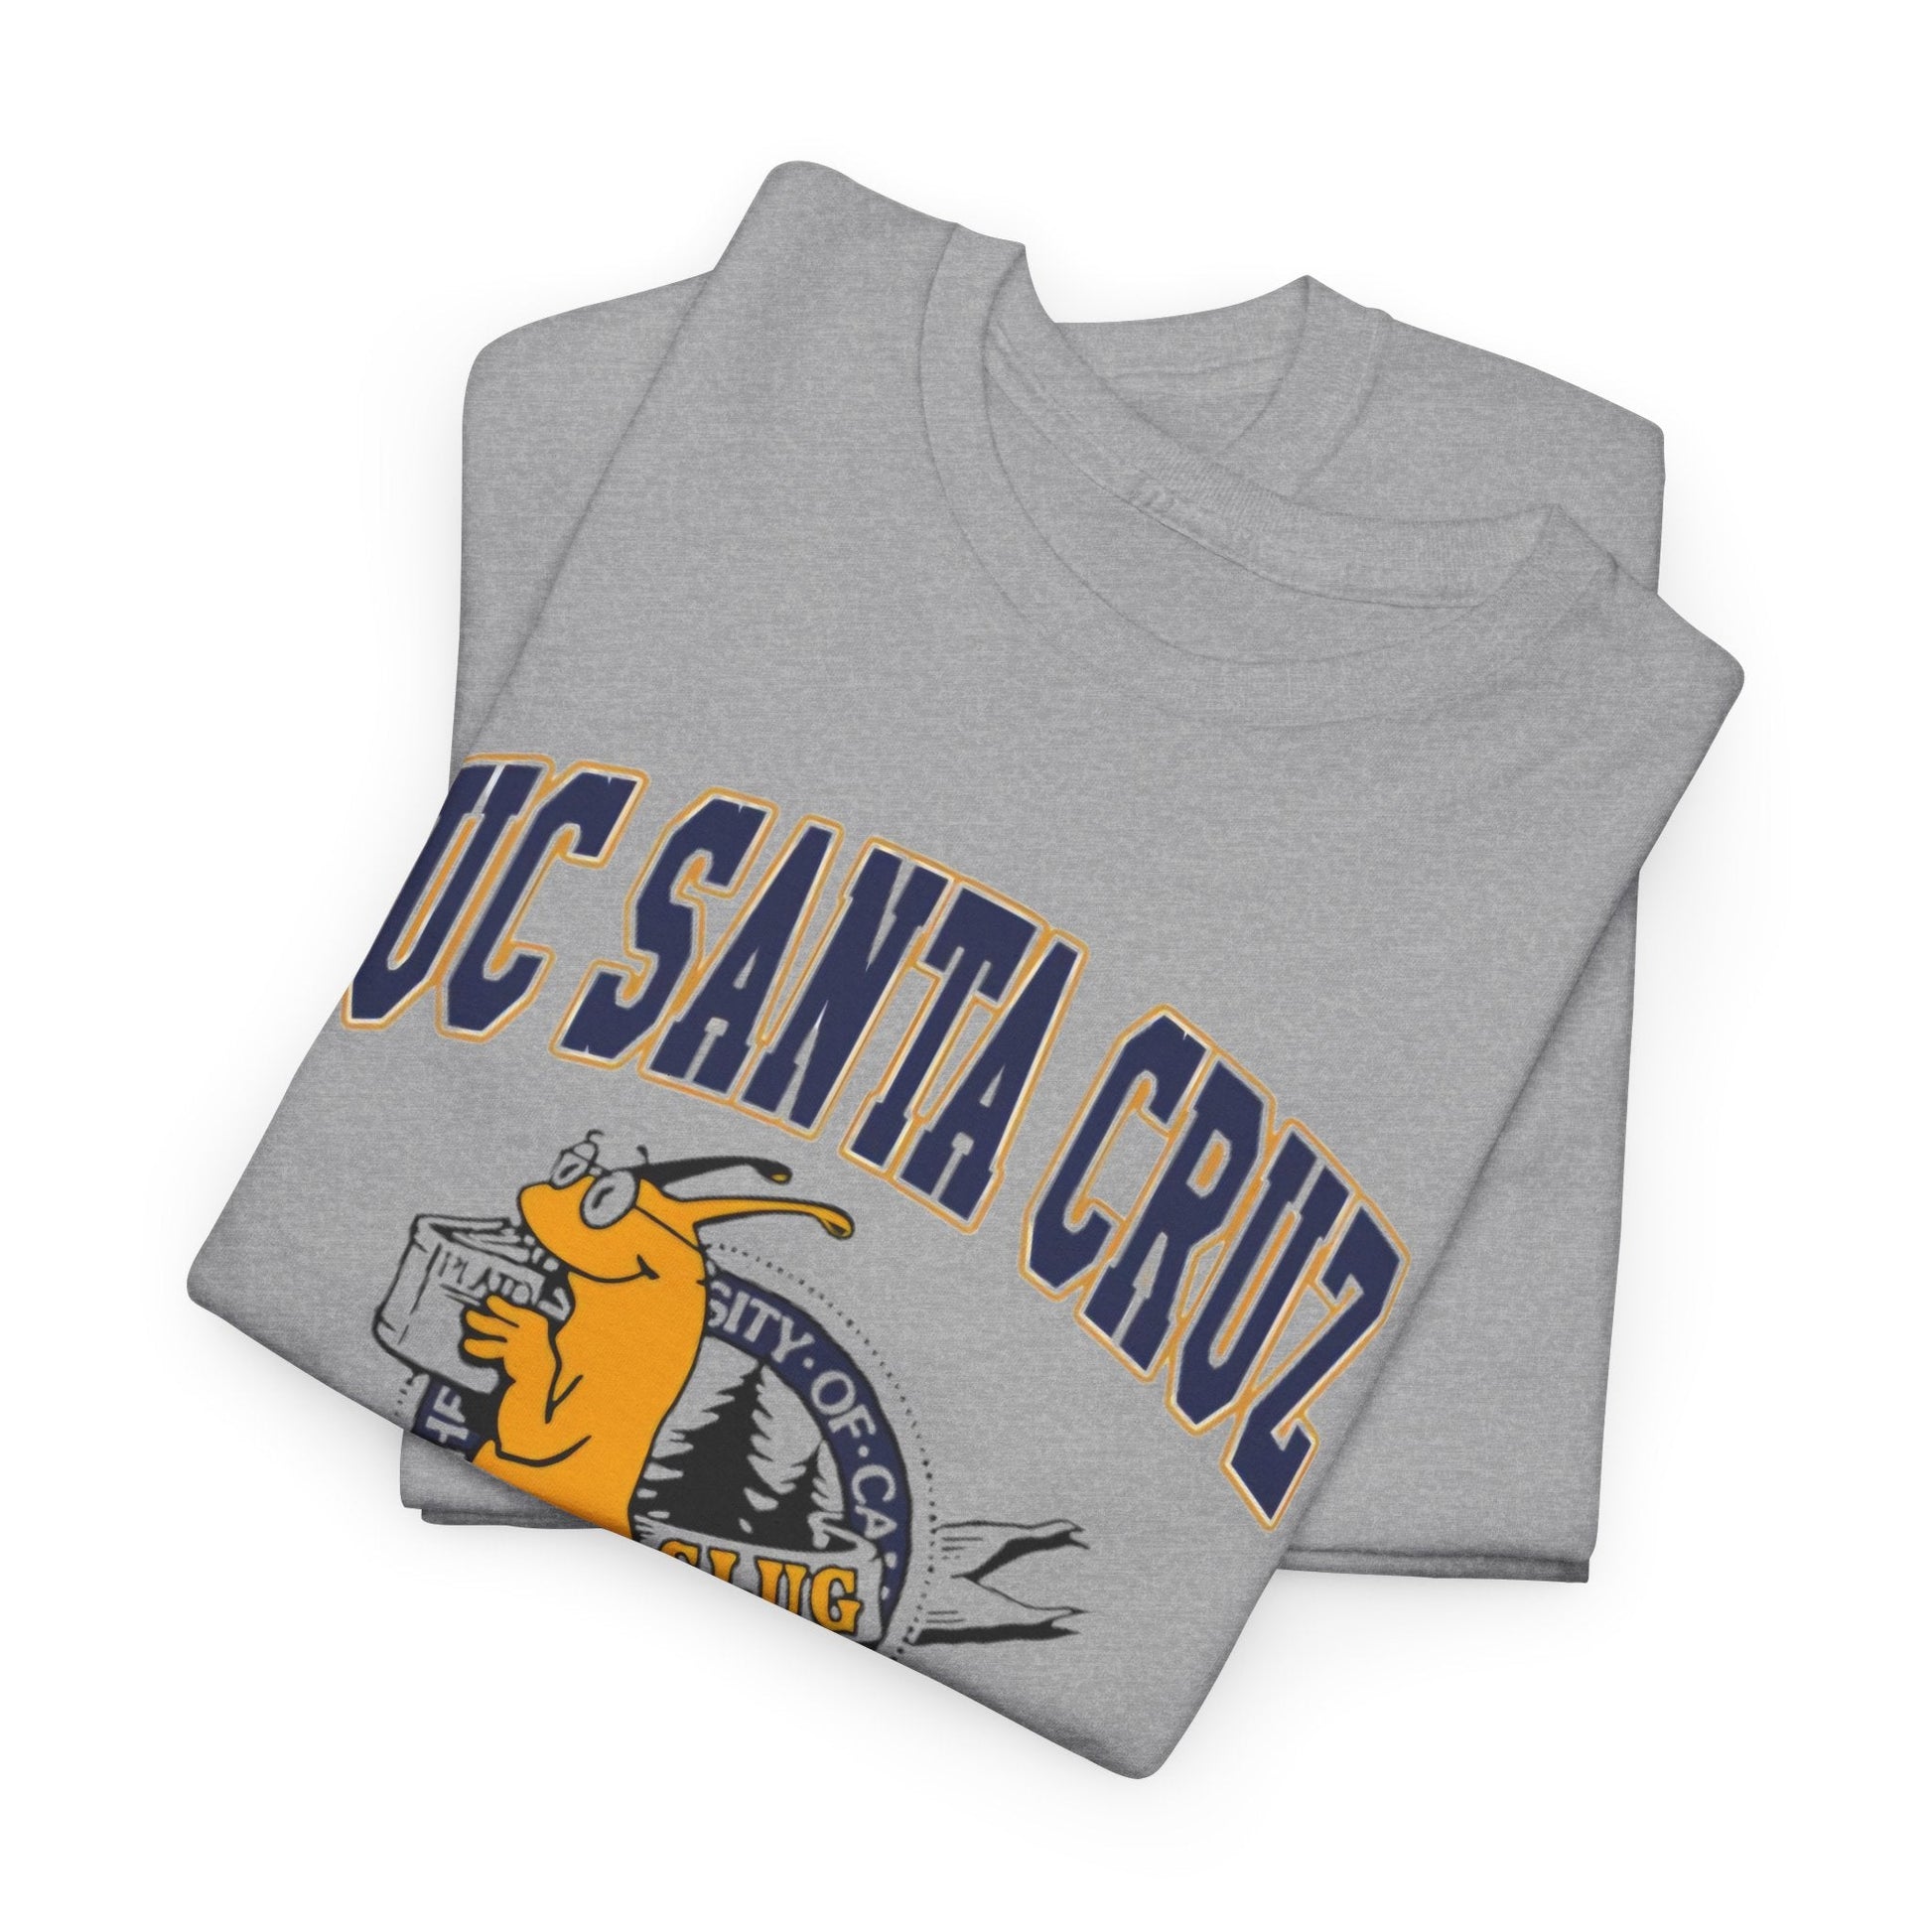 UC Santa Cruz Banana Slugs T-Shirt Vincent Vega Costume Pulp Fiction - RetroTeeShop